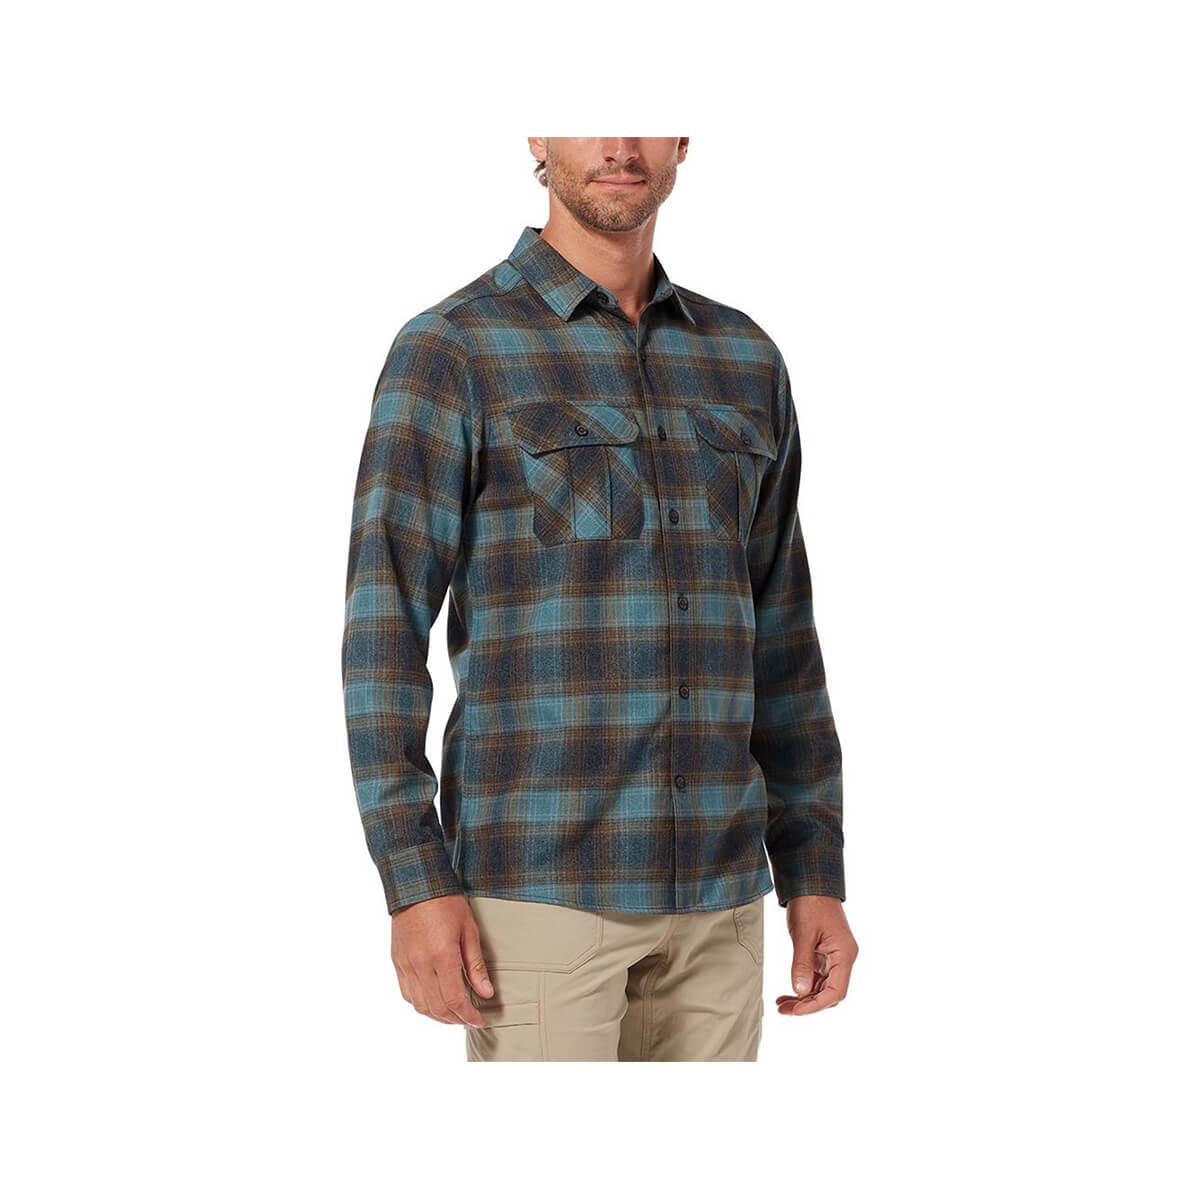  Men's Lost Coast Flannel Plaid Long Sleeve Shirt